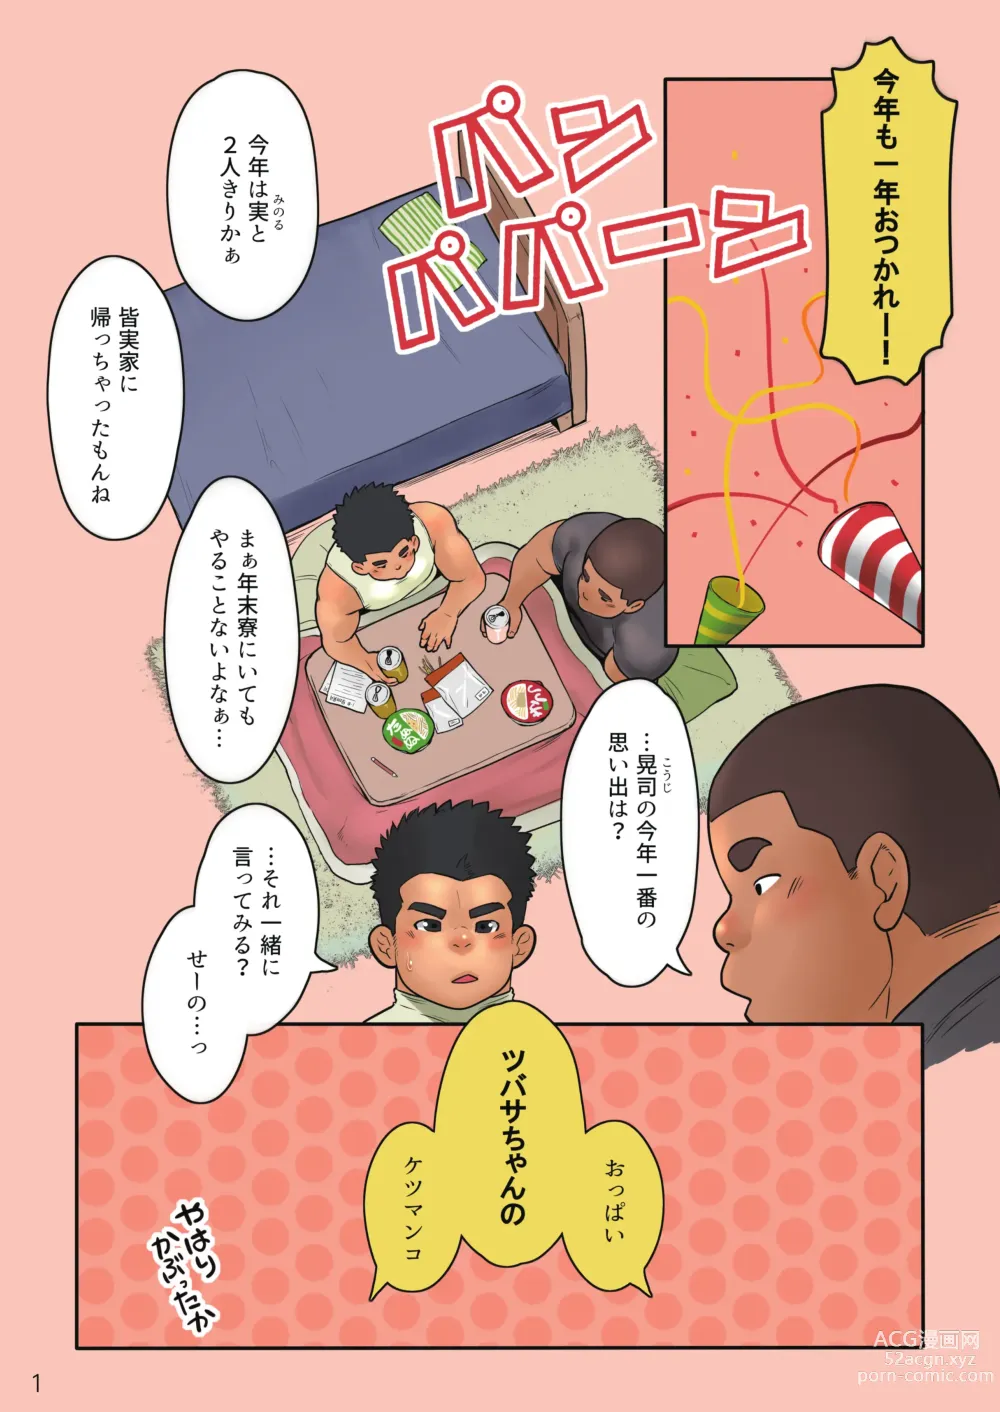 Page 2 of doujinshi Kyuji vs Kyuji